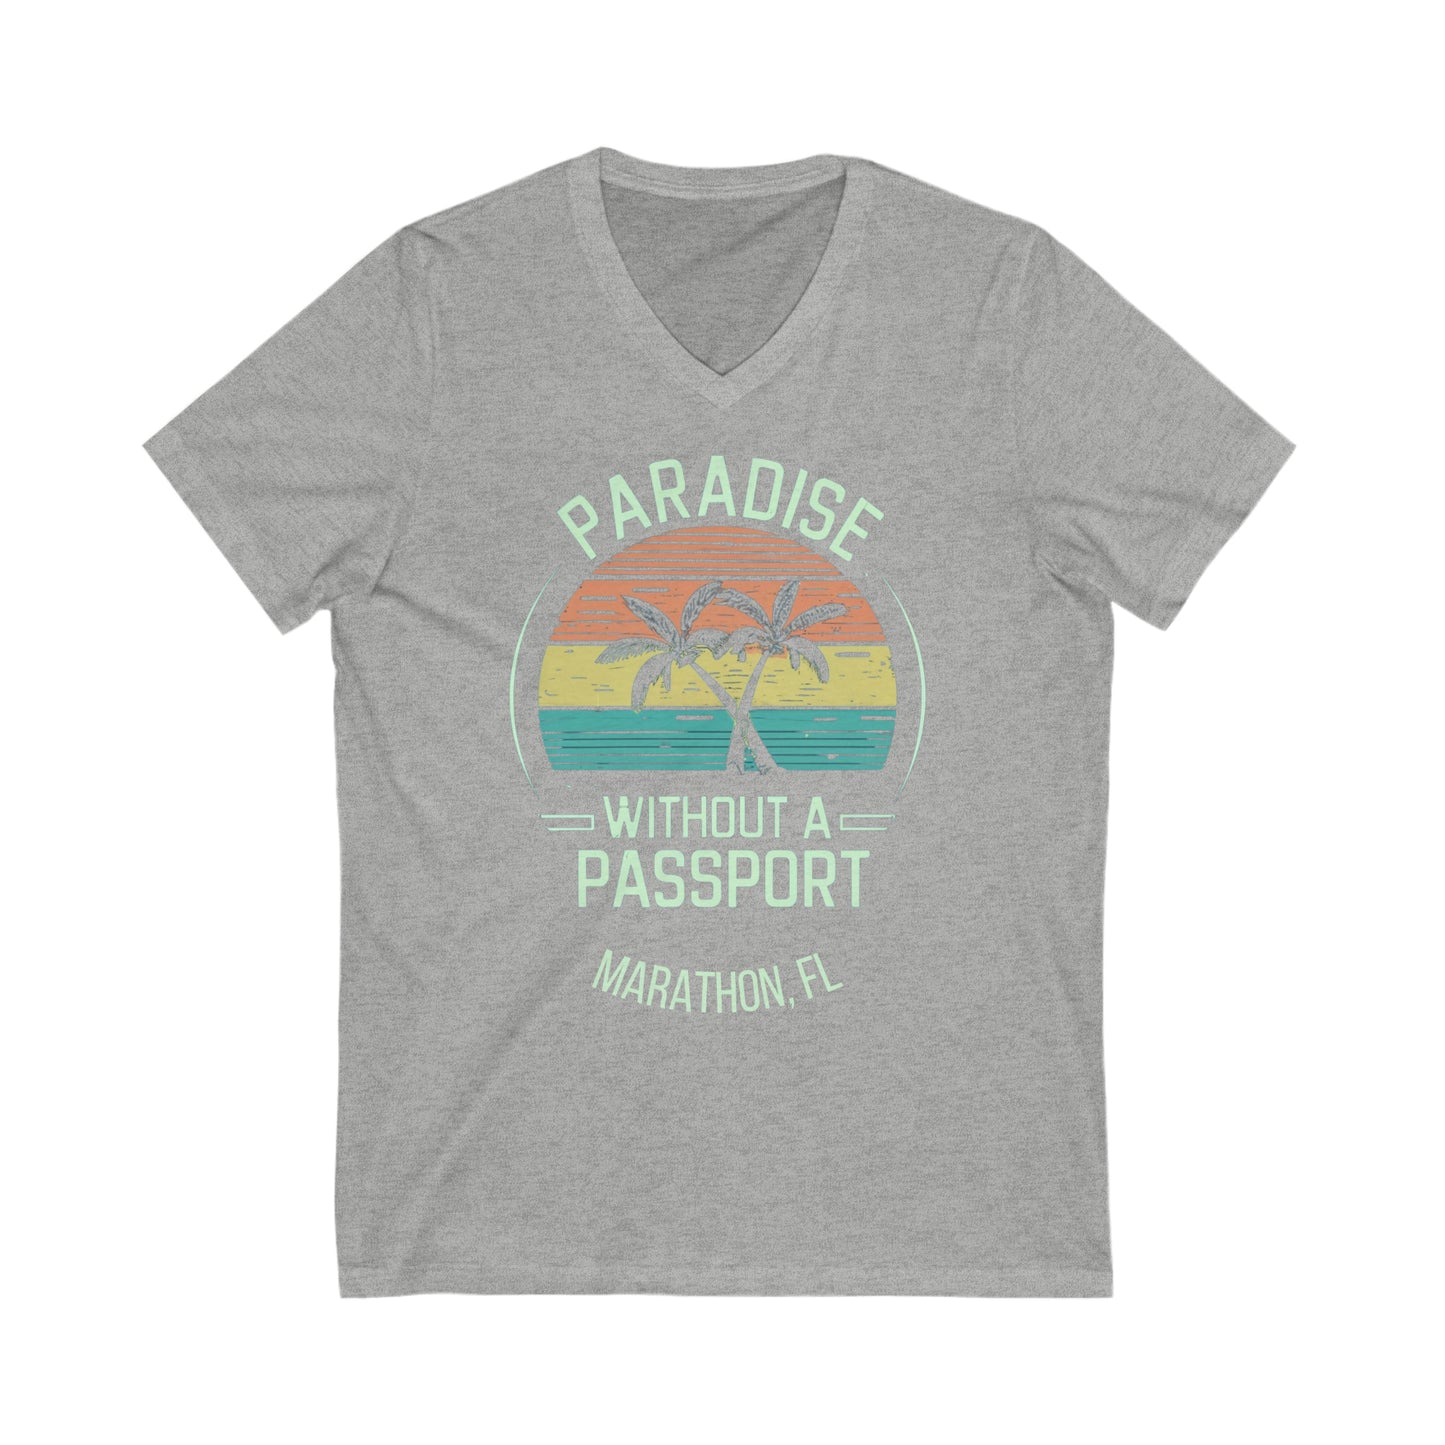 Paradise without a passport vintage -  vneck tee - marathon florida vneck - womens or mens